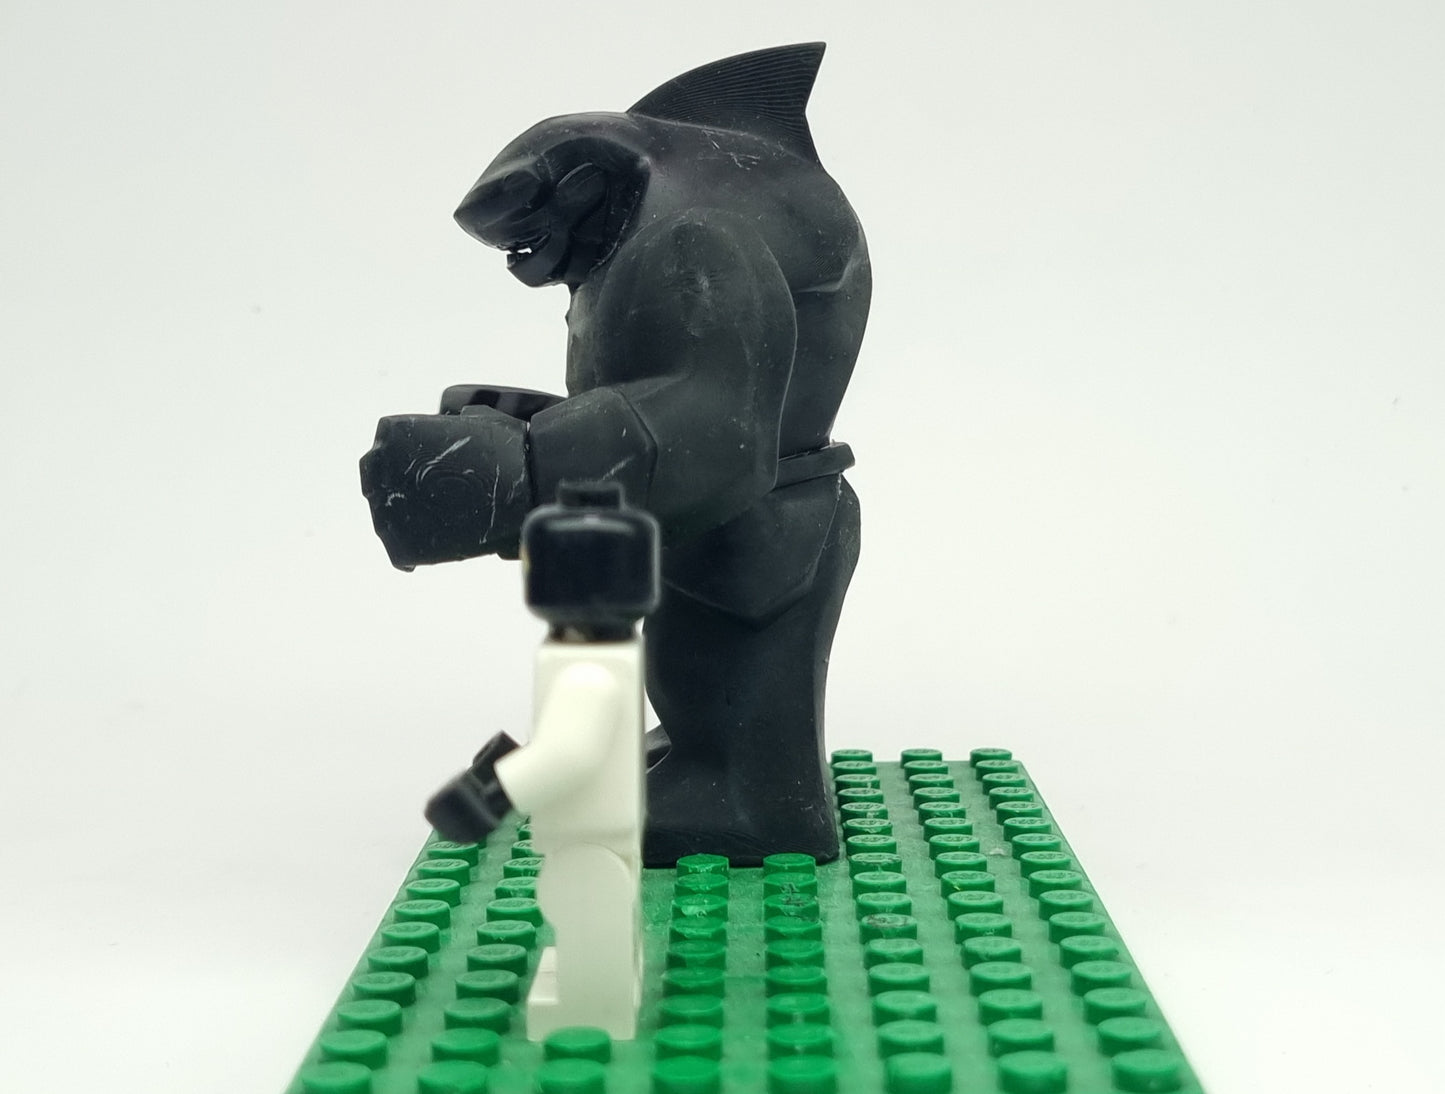 Building toy custom 3D printed super hero big shark!